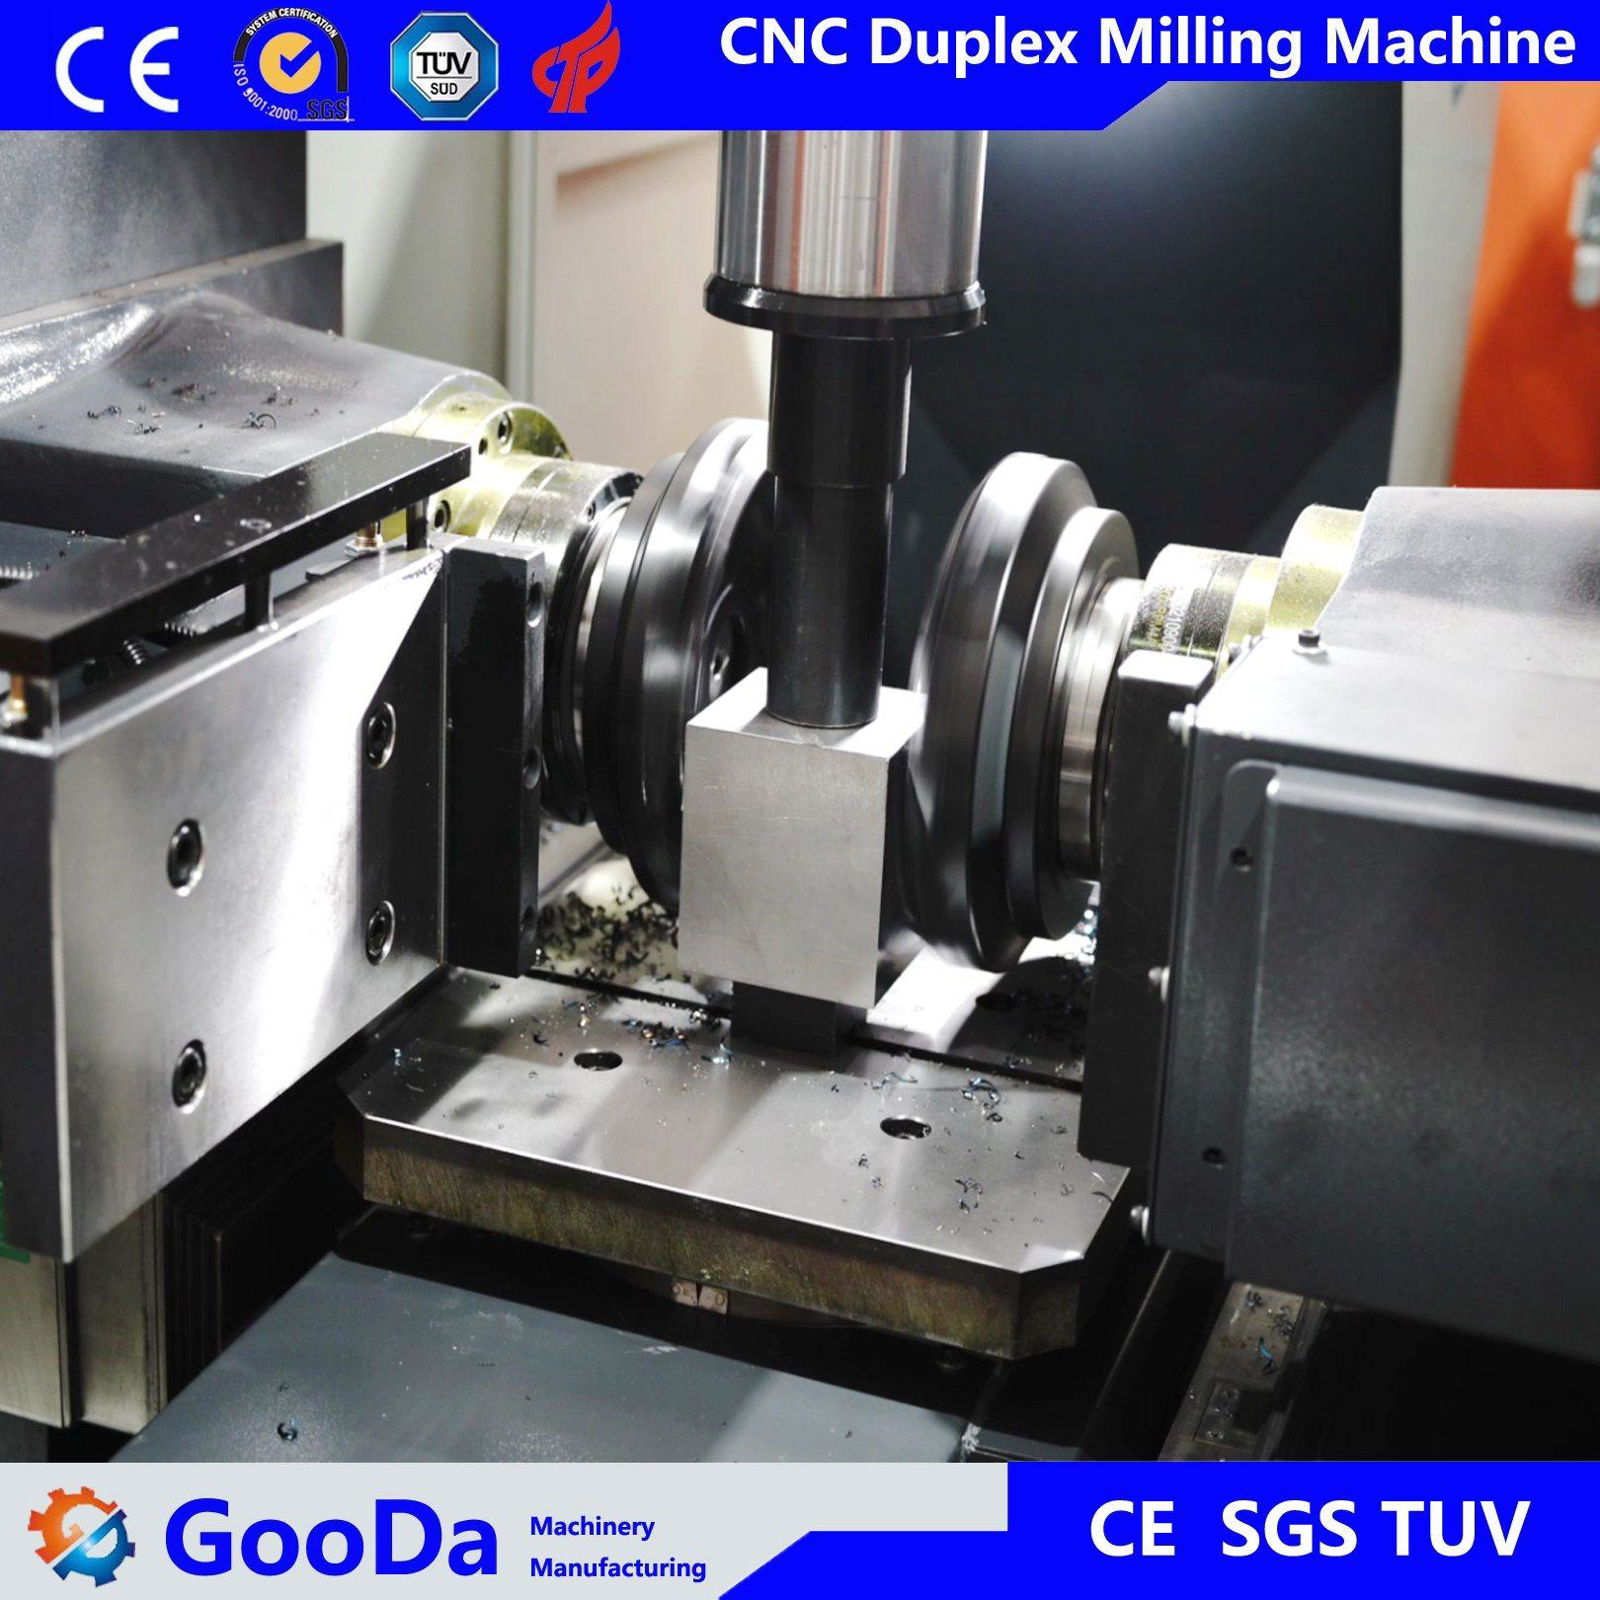 Powerful Twin Head CNC Duplex Milling Machine Precision Full Automatica Cutting  4